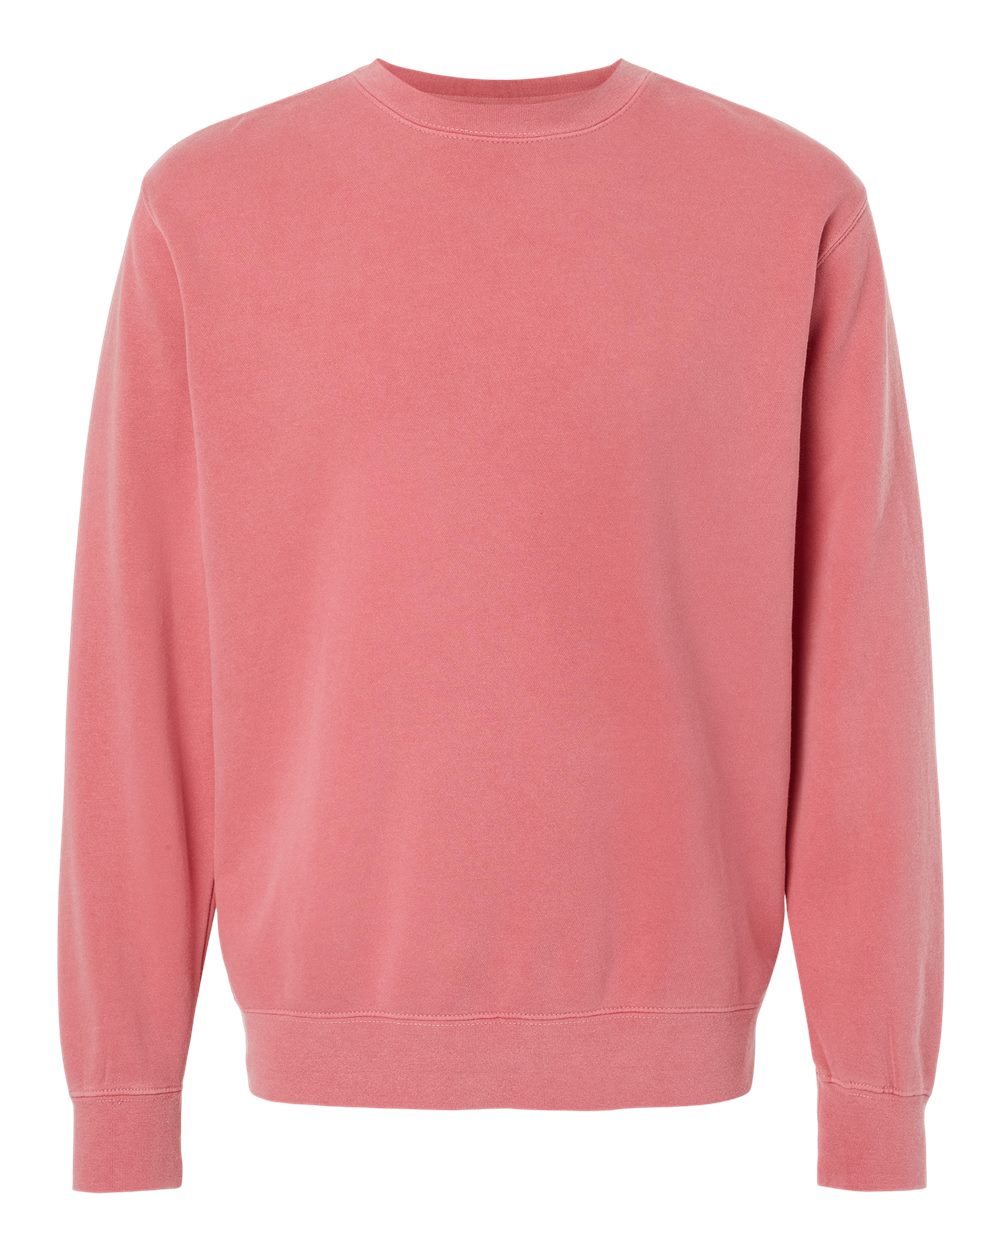 Custom Lake Vintage Pigment Dyed Crewneck Sweatshirt - Pink